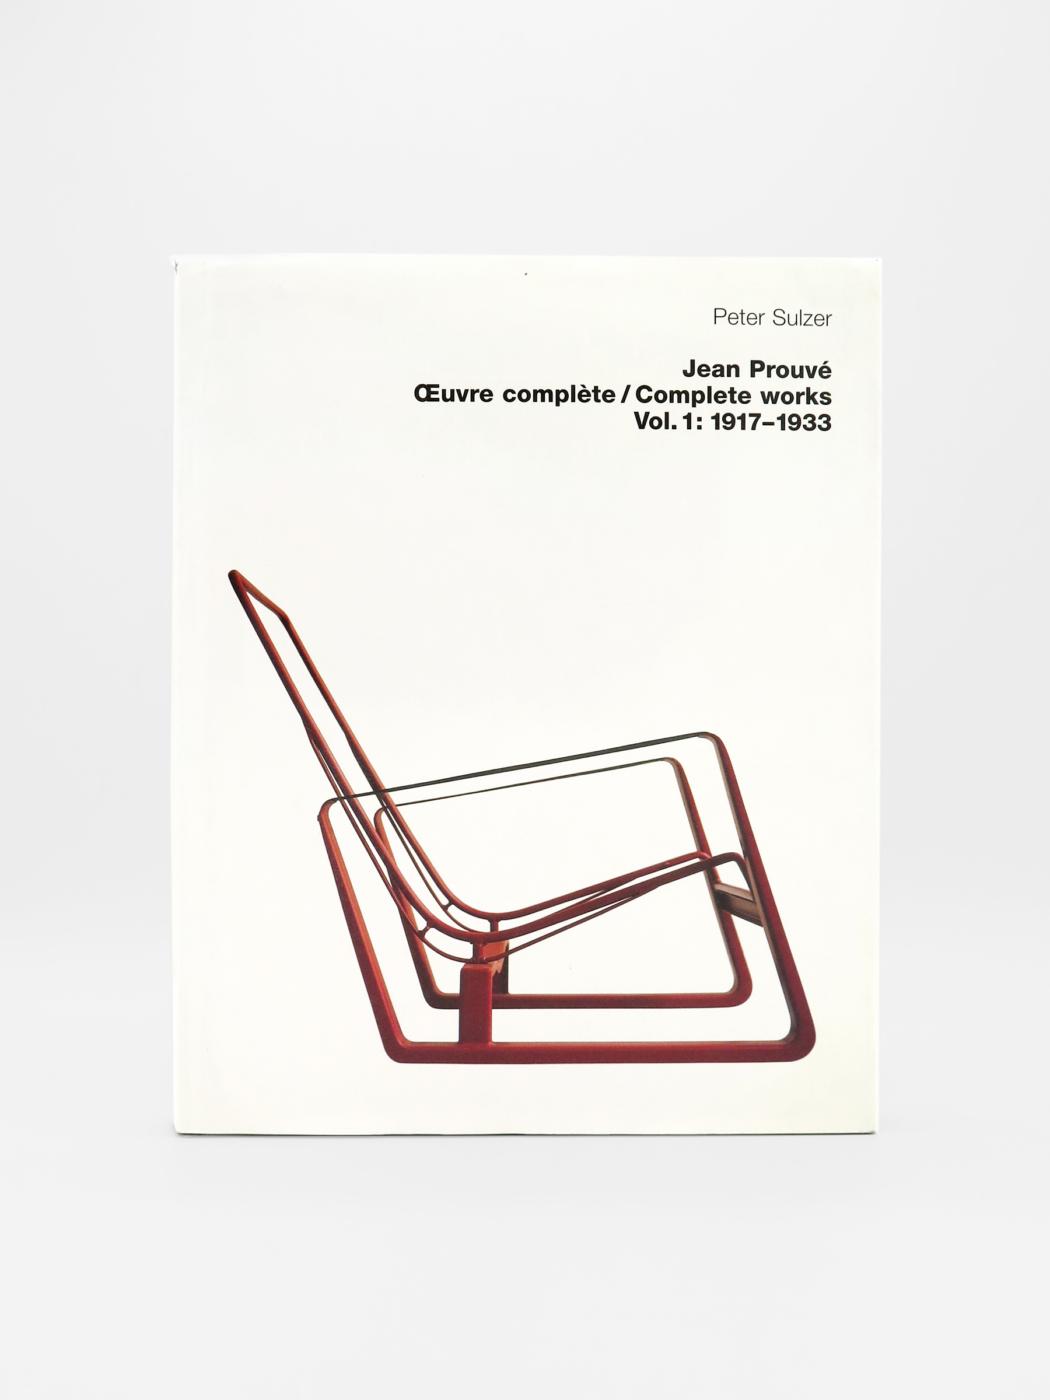 Peter Sulzer, Jean Prouve Complete Works Vol. 1